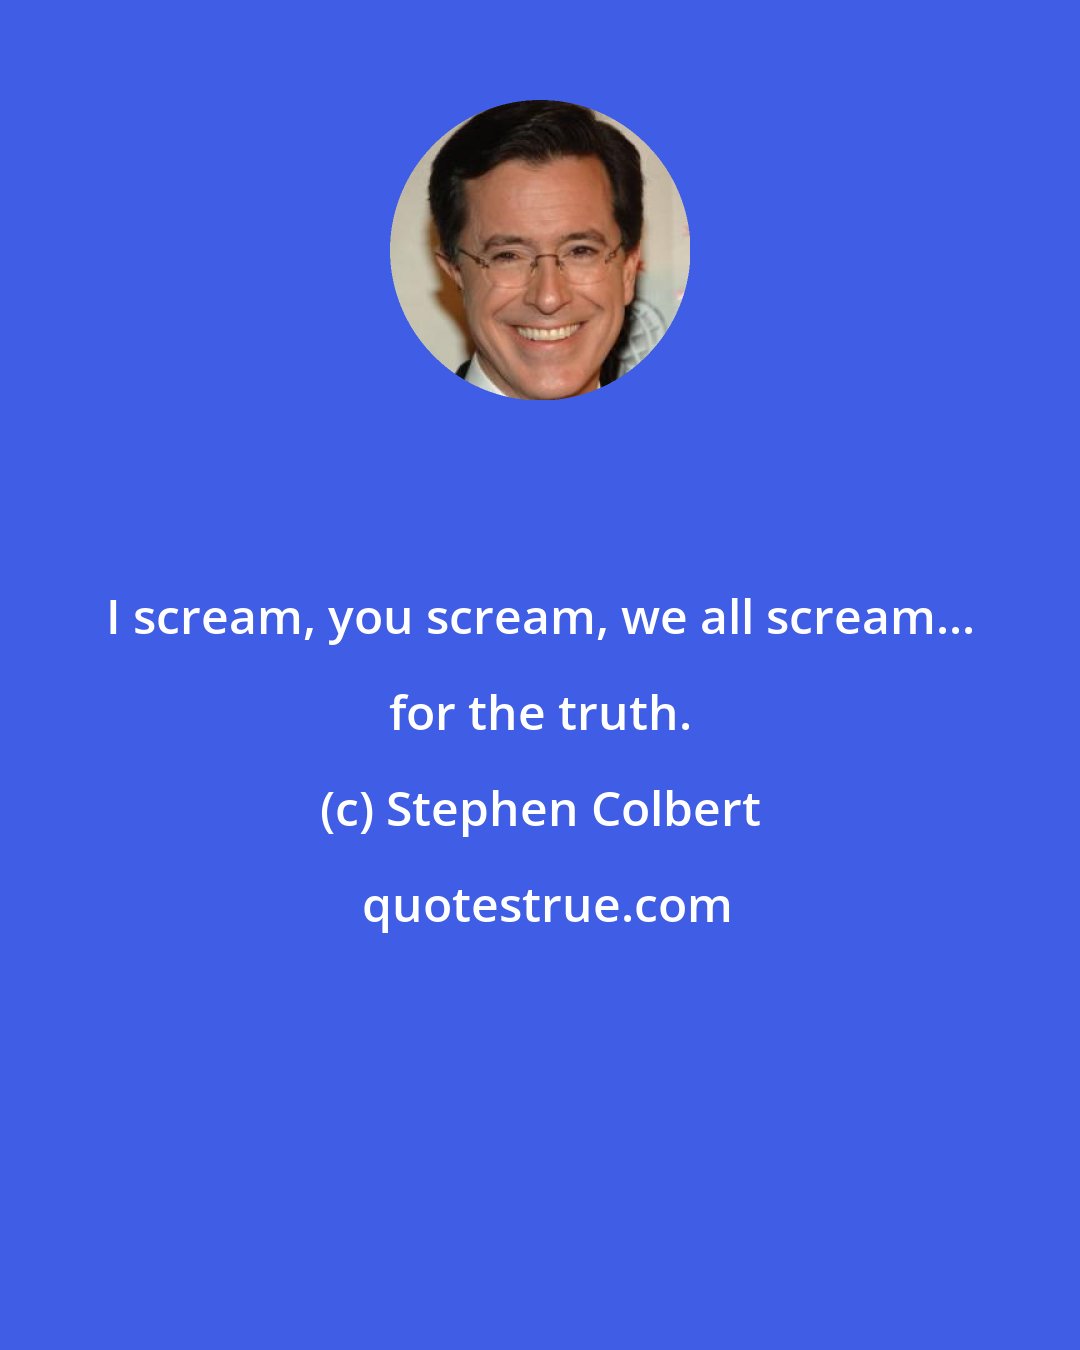 Stephen Colbert: I scream, you scream, we all scream... for the truth.